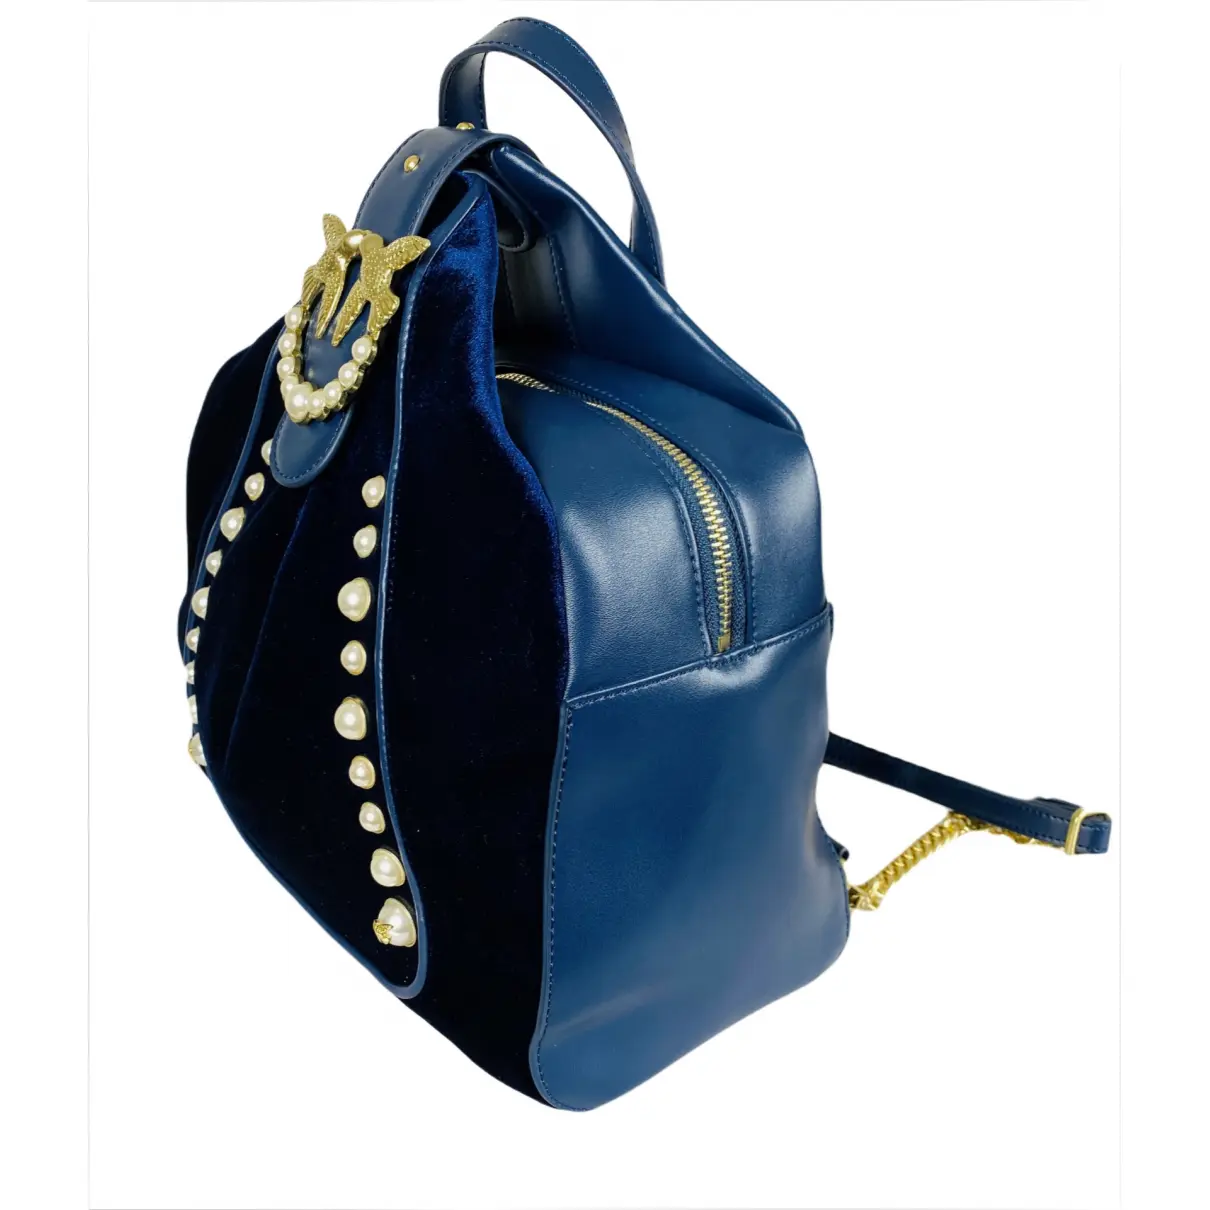 Buy Pinko Love Bag leather backpack online